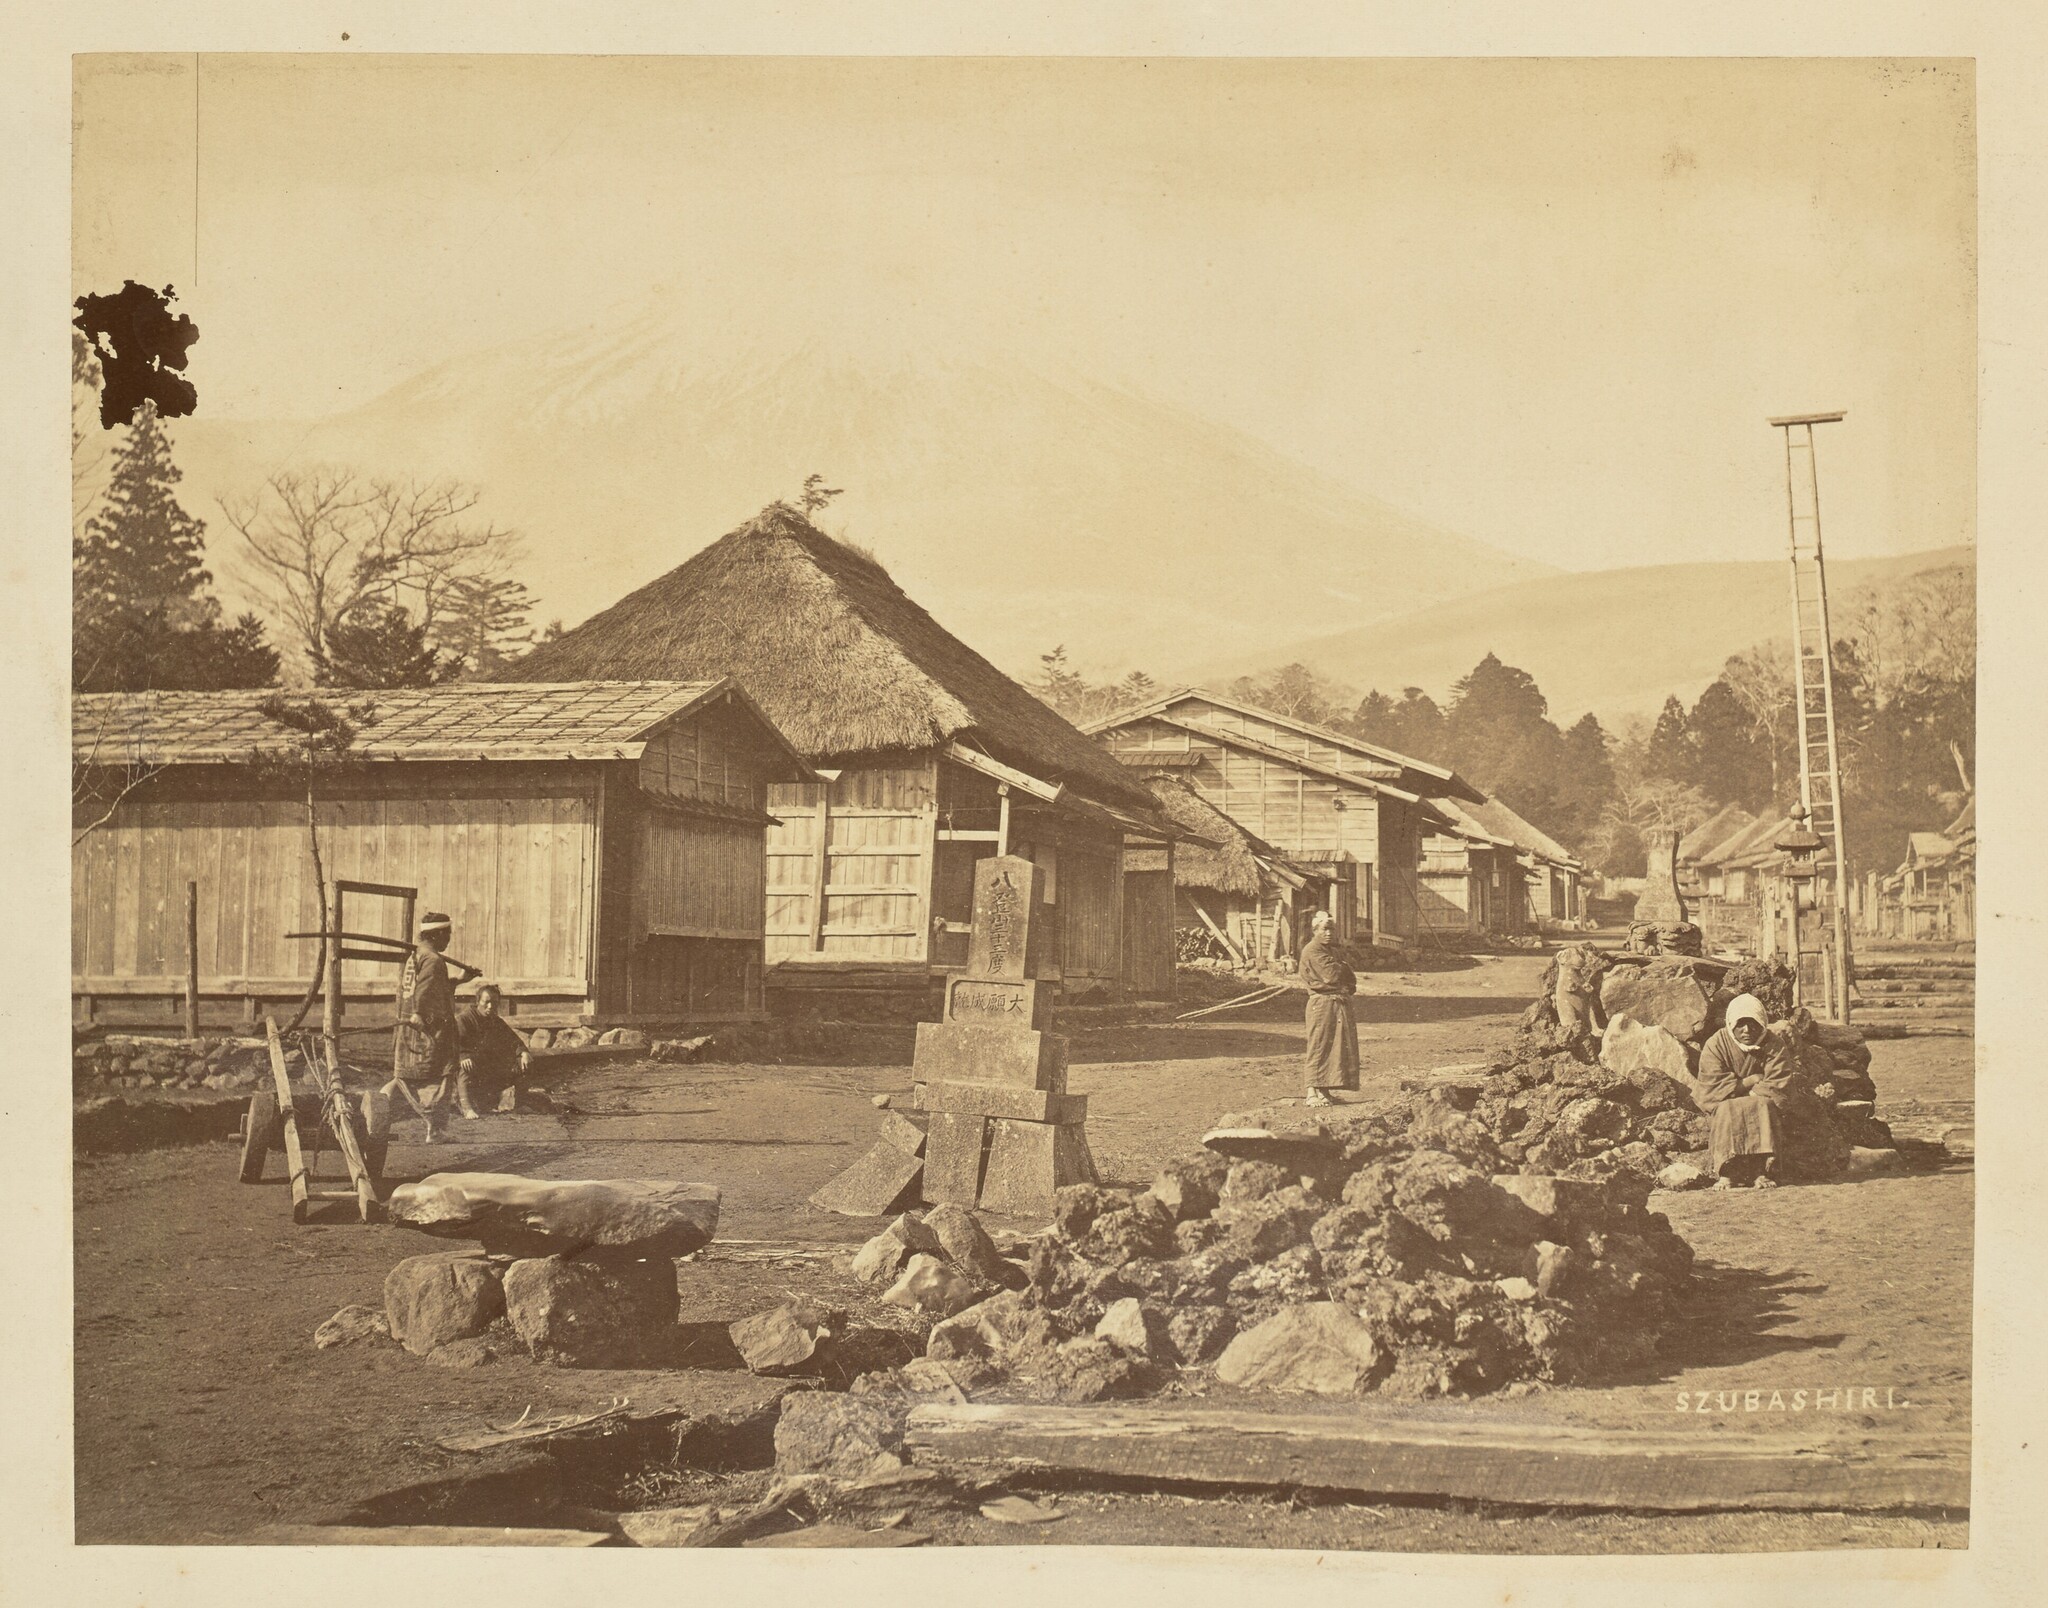 Japan 19th century. - Sciencepro, Story, Japan, 19th century, Informative, Black and white photo, Old photo, Osaka, Interesting, Longpost